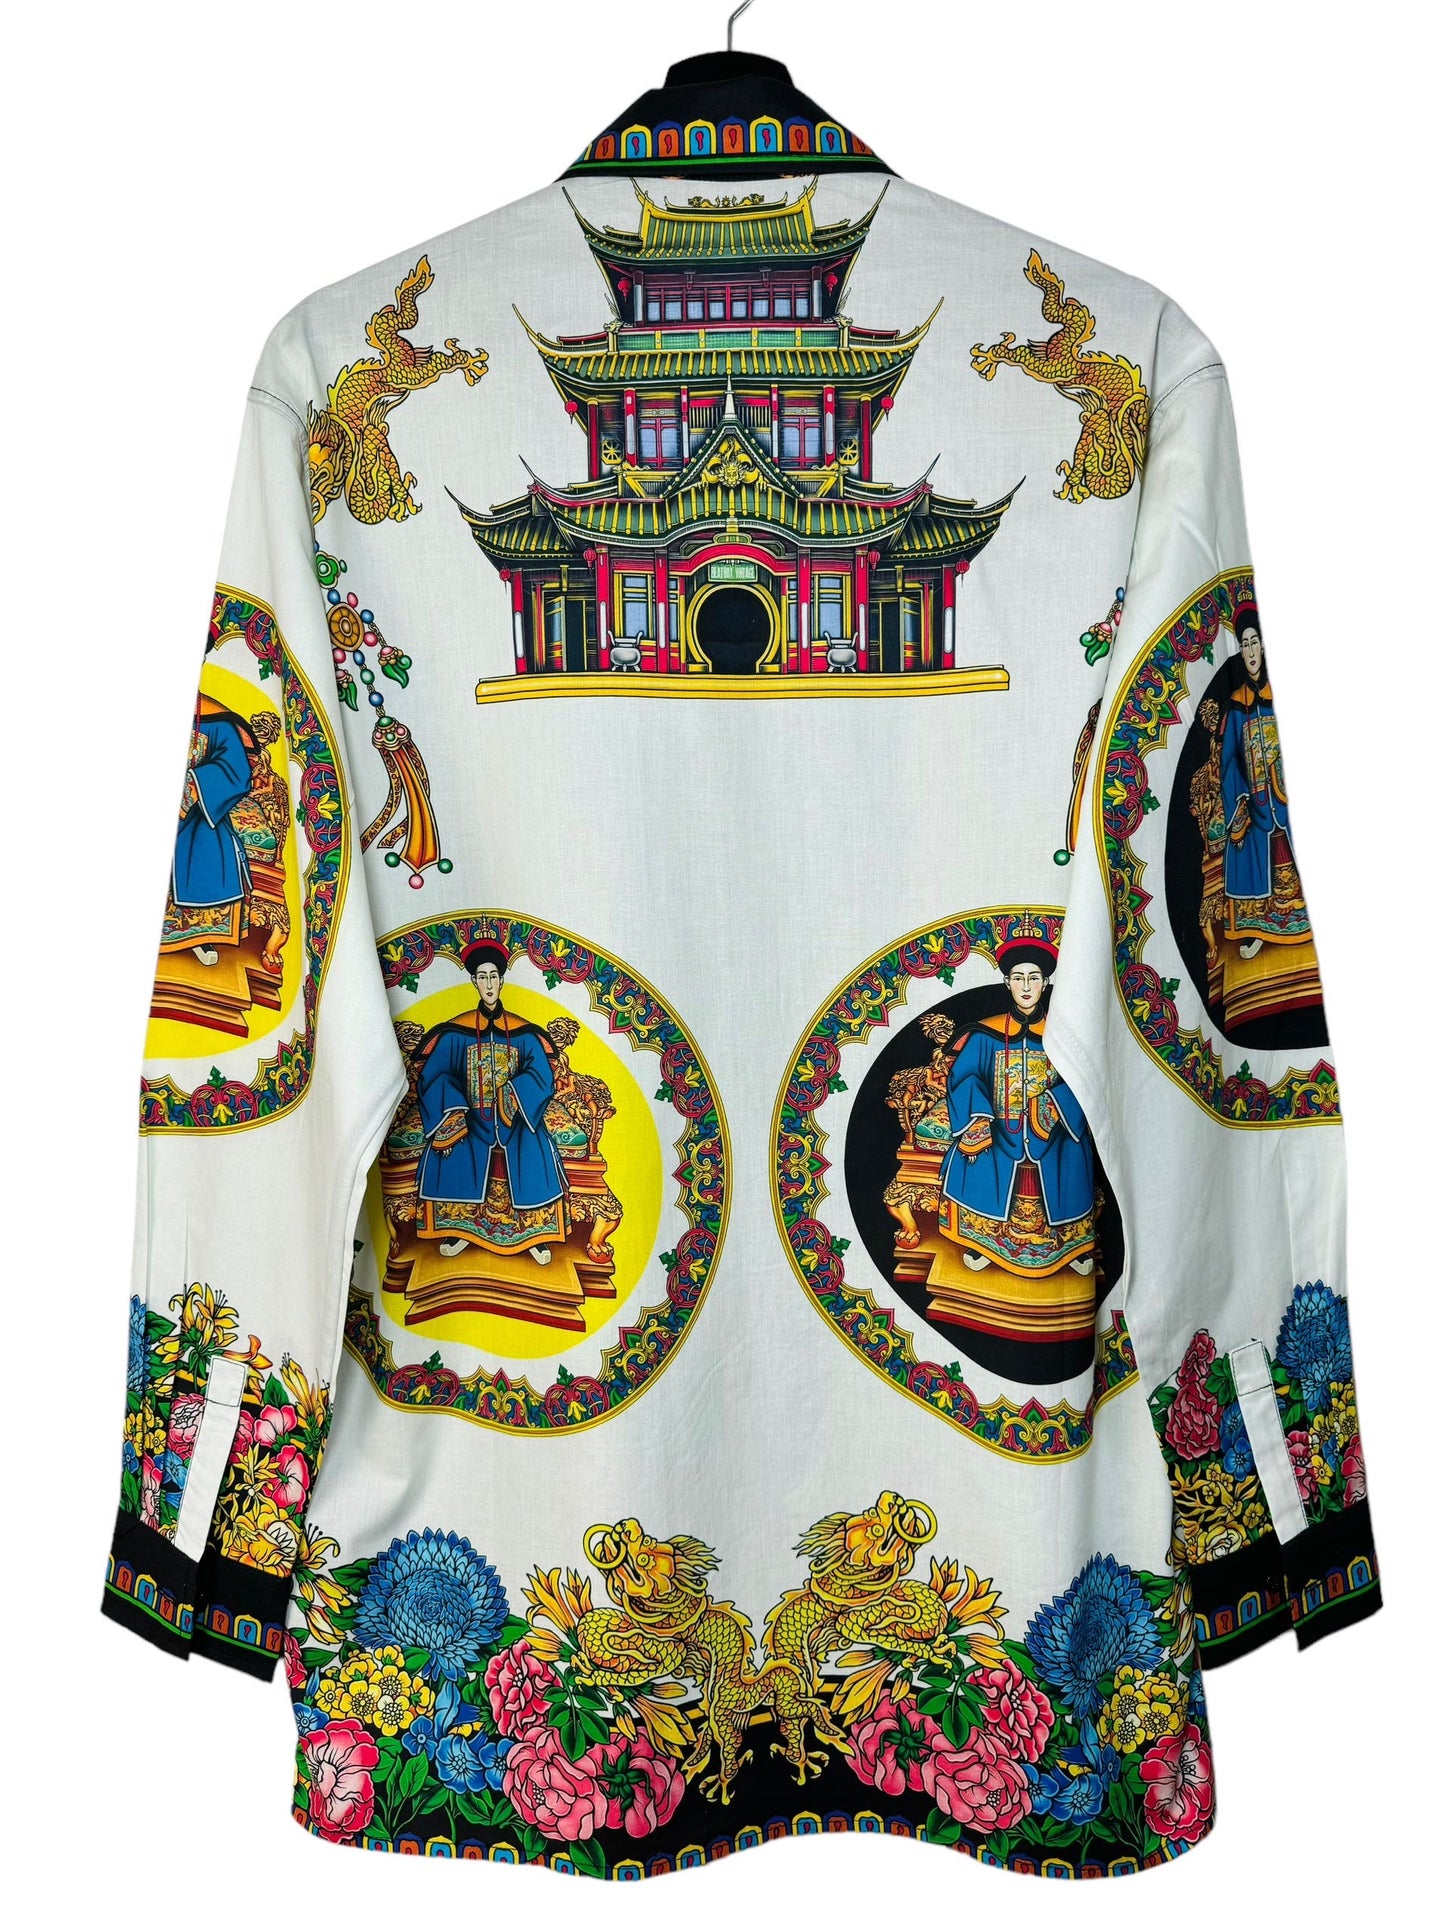 China Emperor Beatbox Vintage shirt